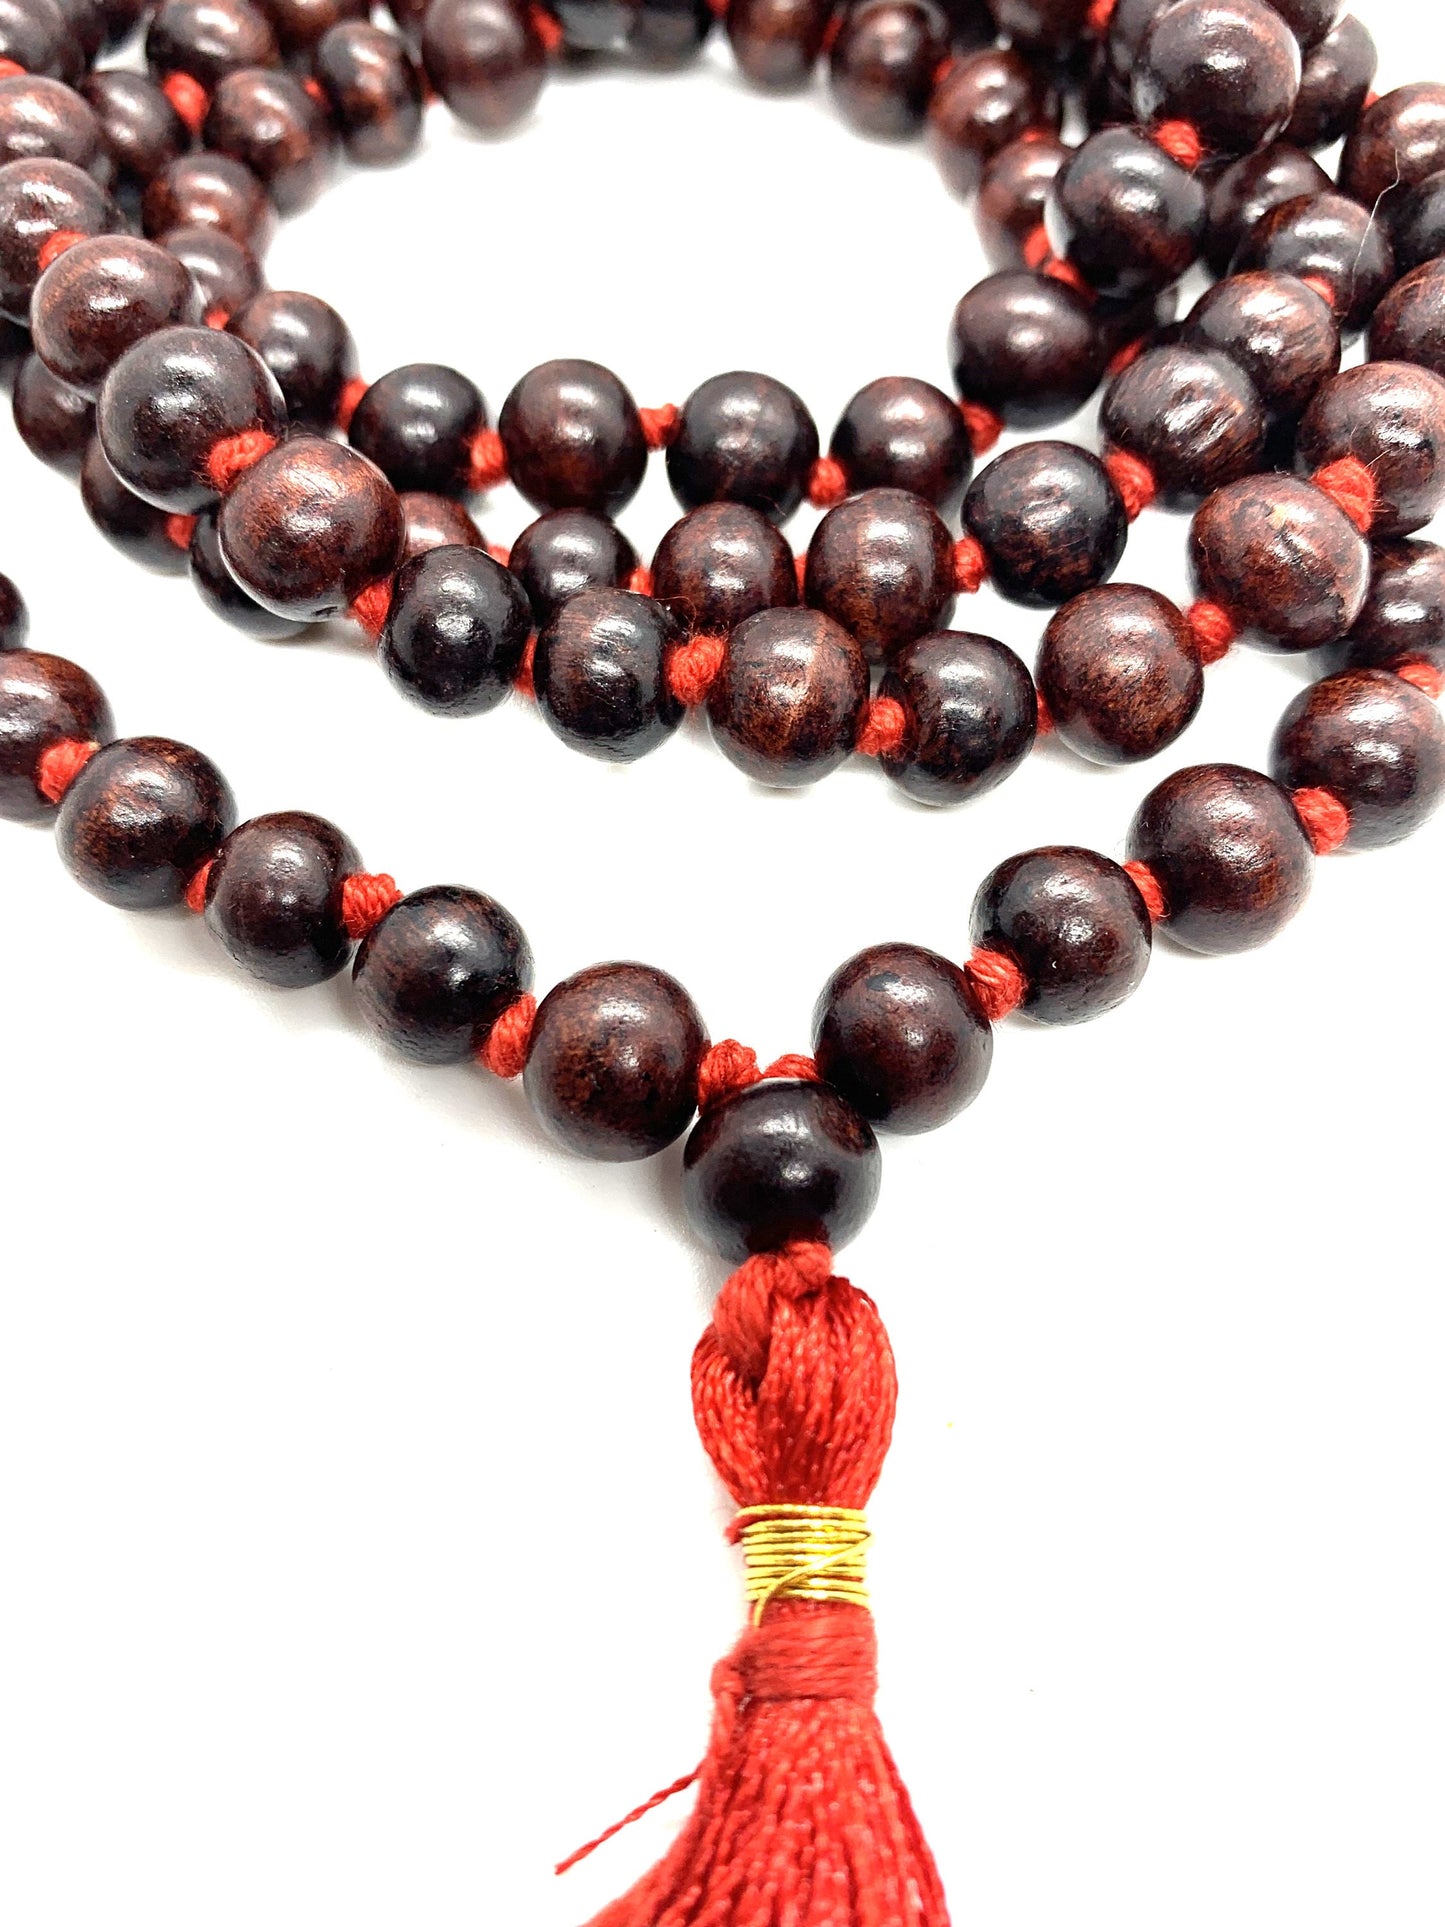 Rosewood Knotted Mala 108+1 Beads - Handmade knotted rosewood Mala necklace- yoga meditation prayer beads - 10MM Rosewood Mala  Knotted Mala